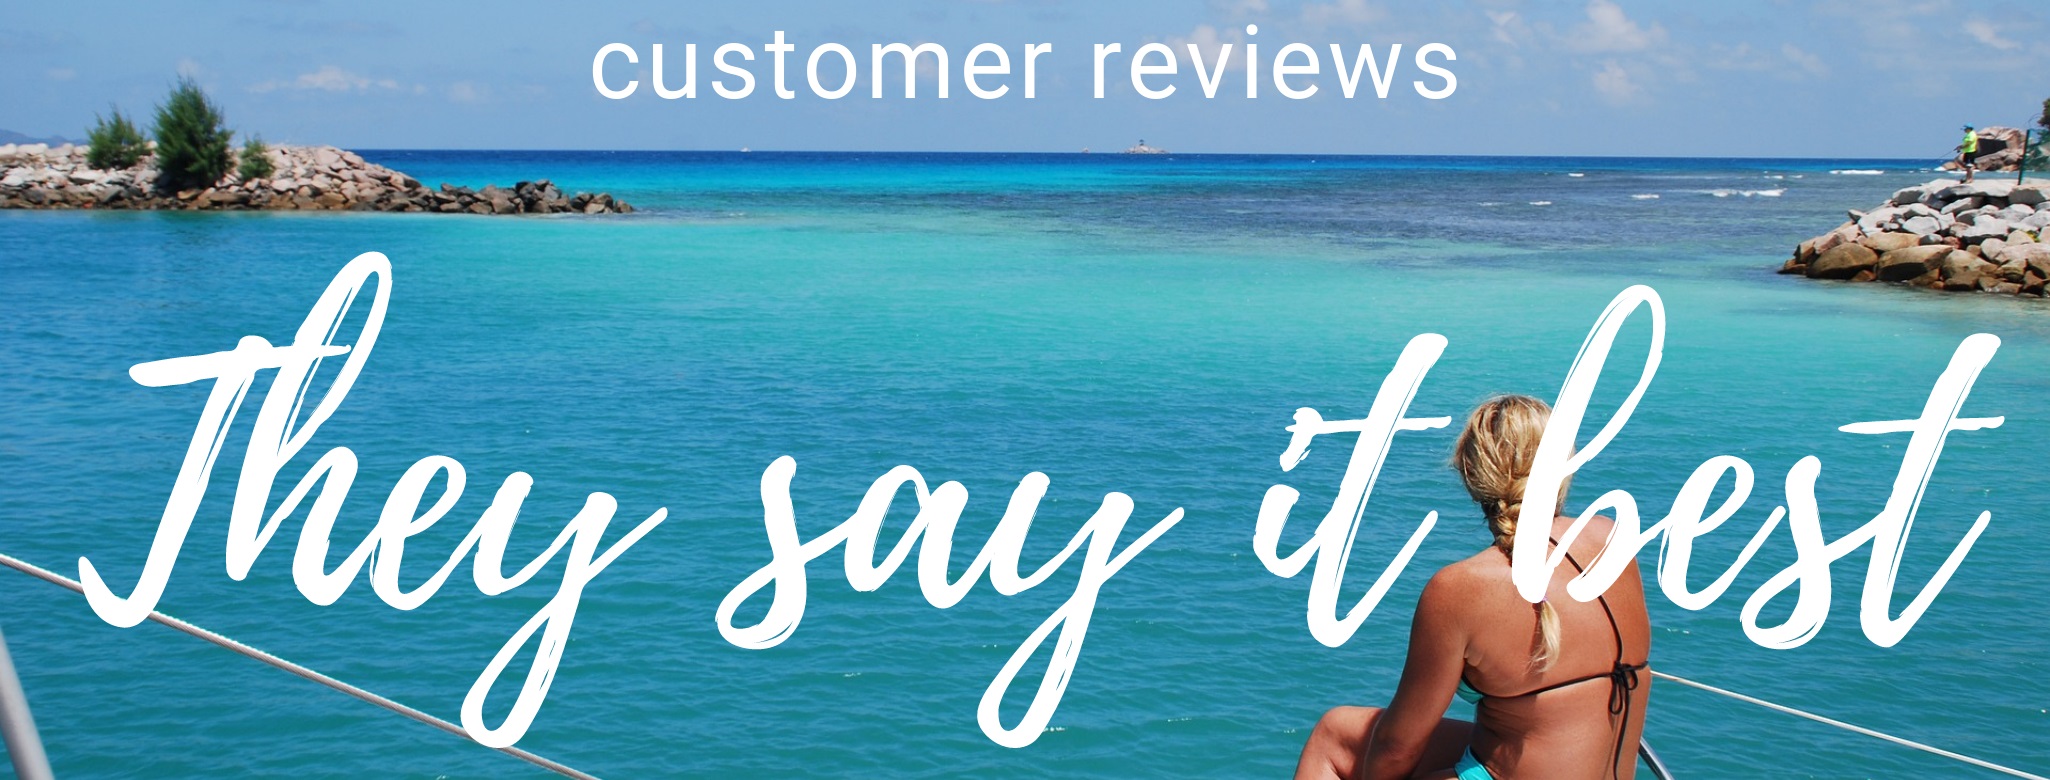 Customer reviews about Caribbean Multihulls